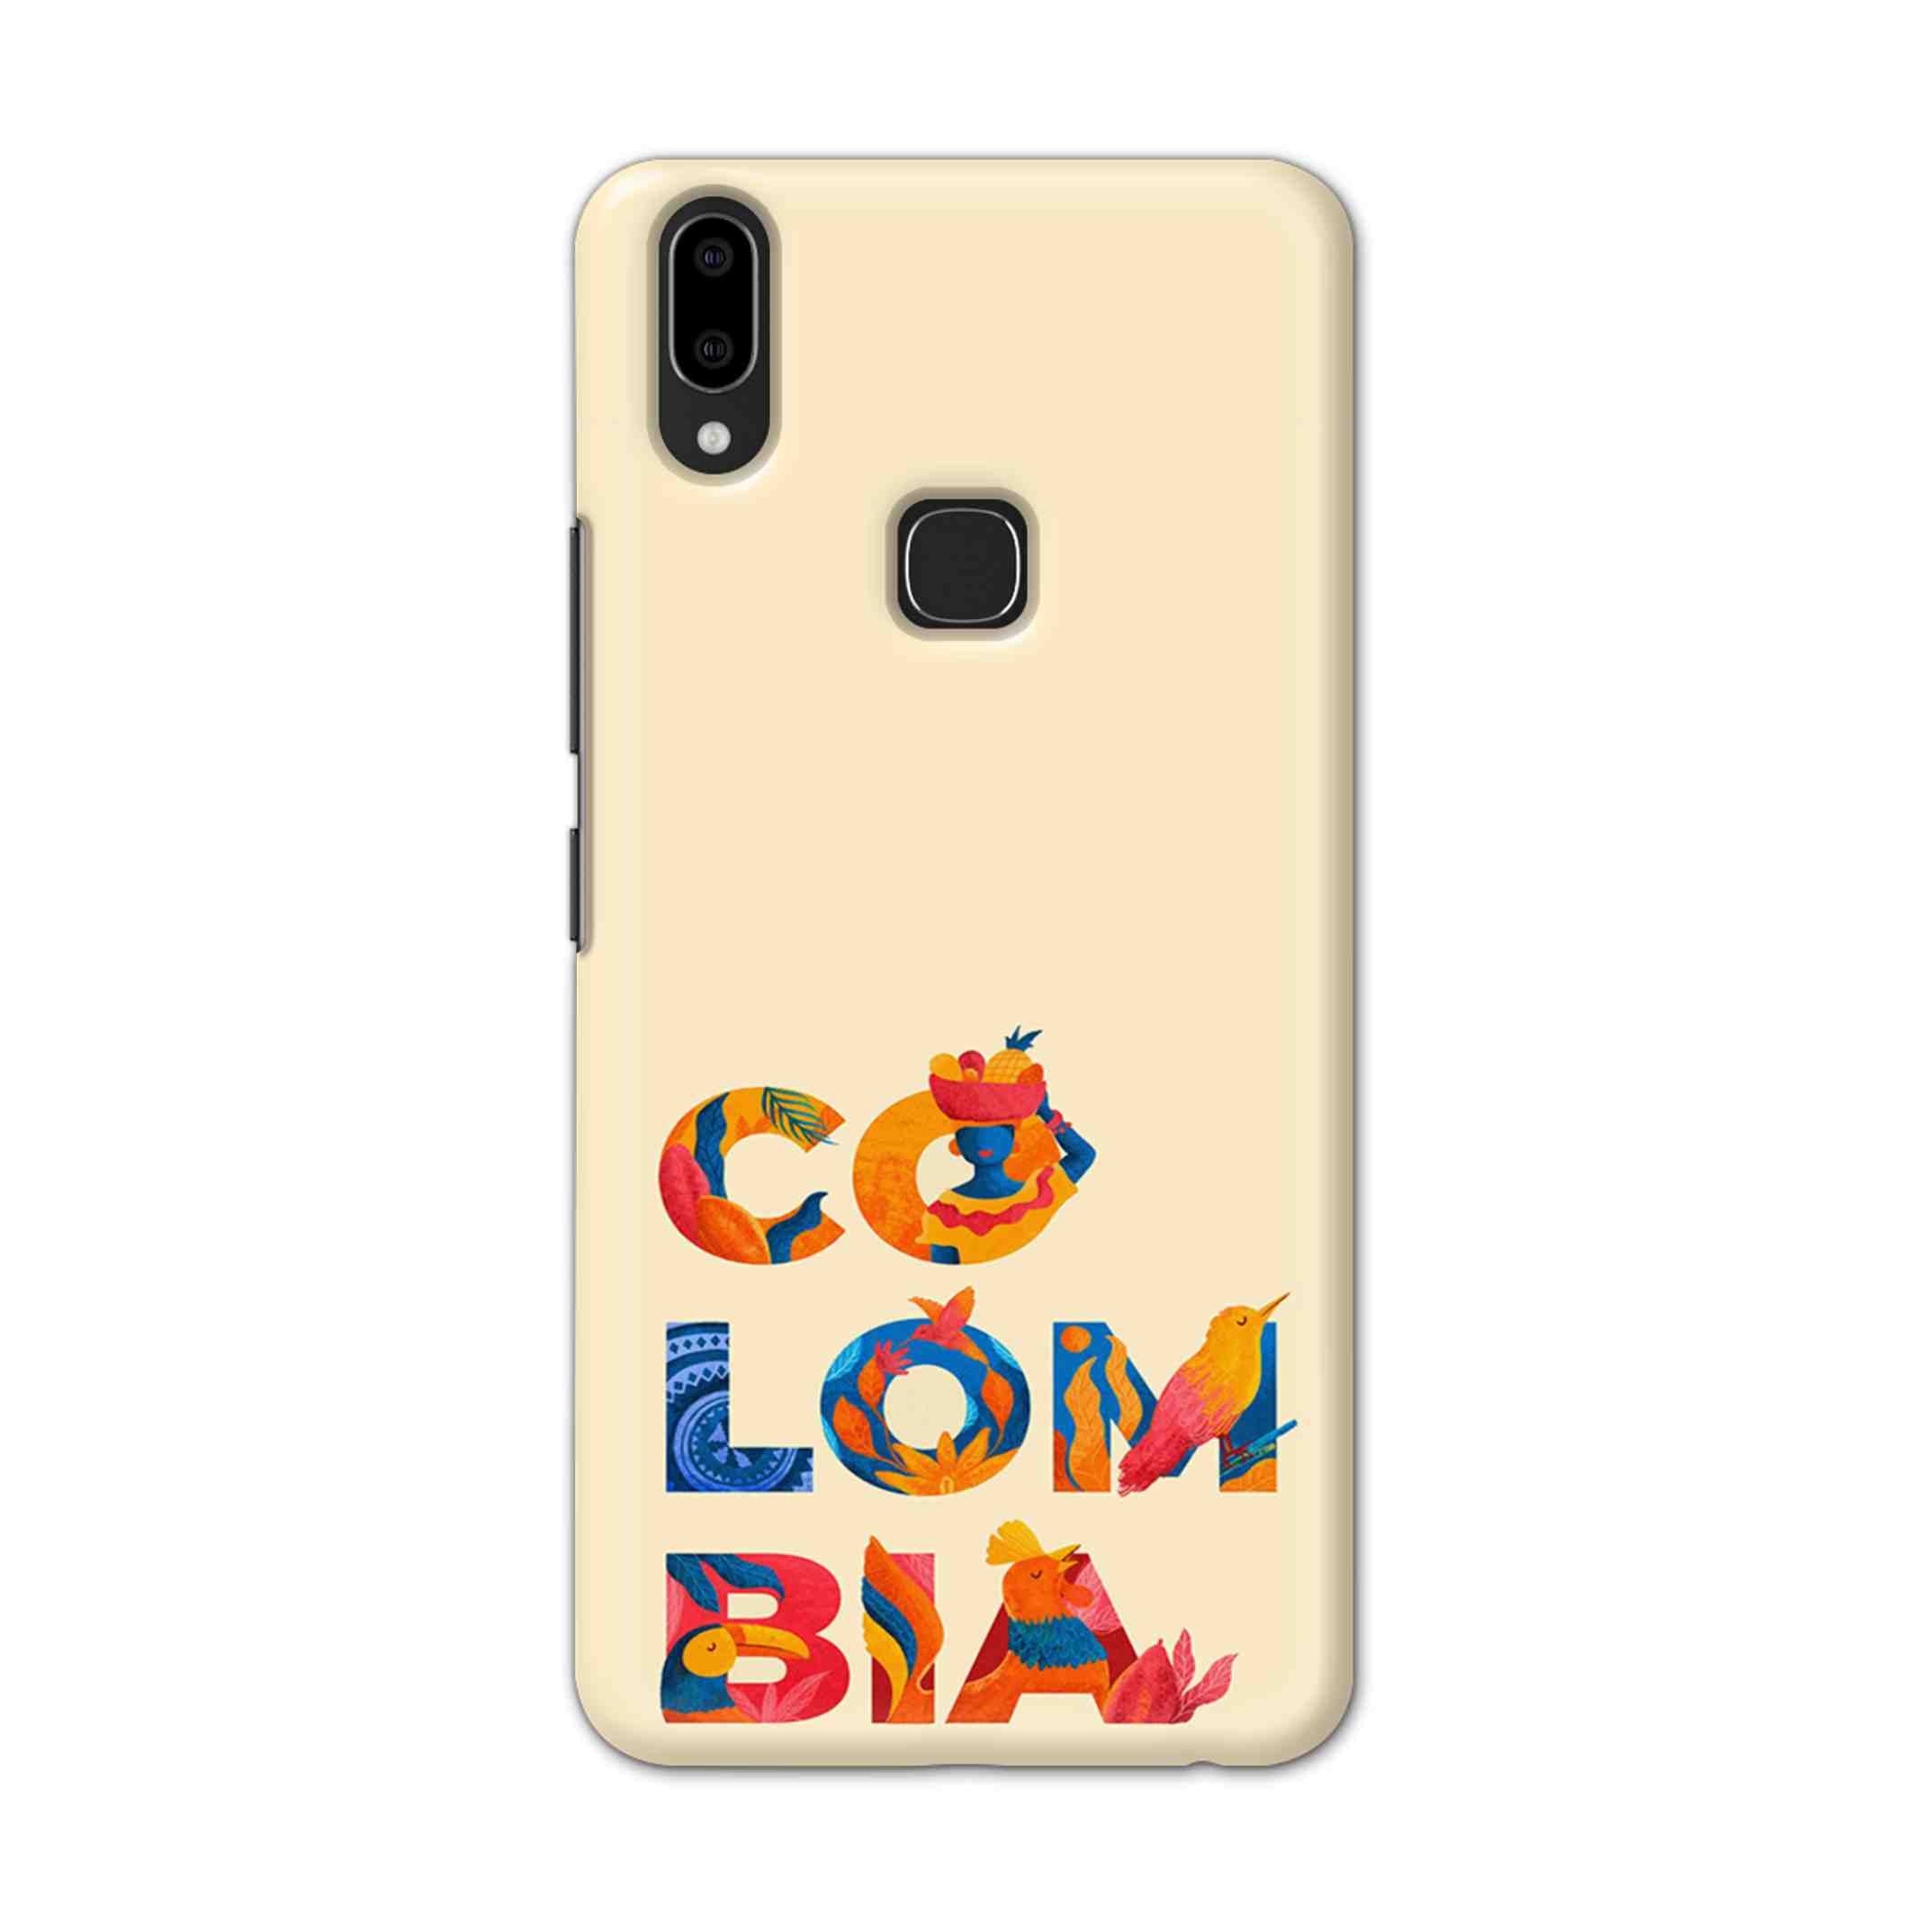 Buy Colombia Hard Back Mobile Phone Case Cover For Vivo V9 / V9 Youth Online